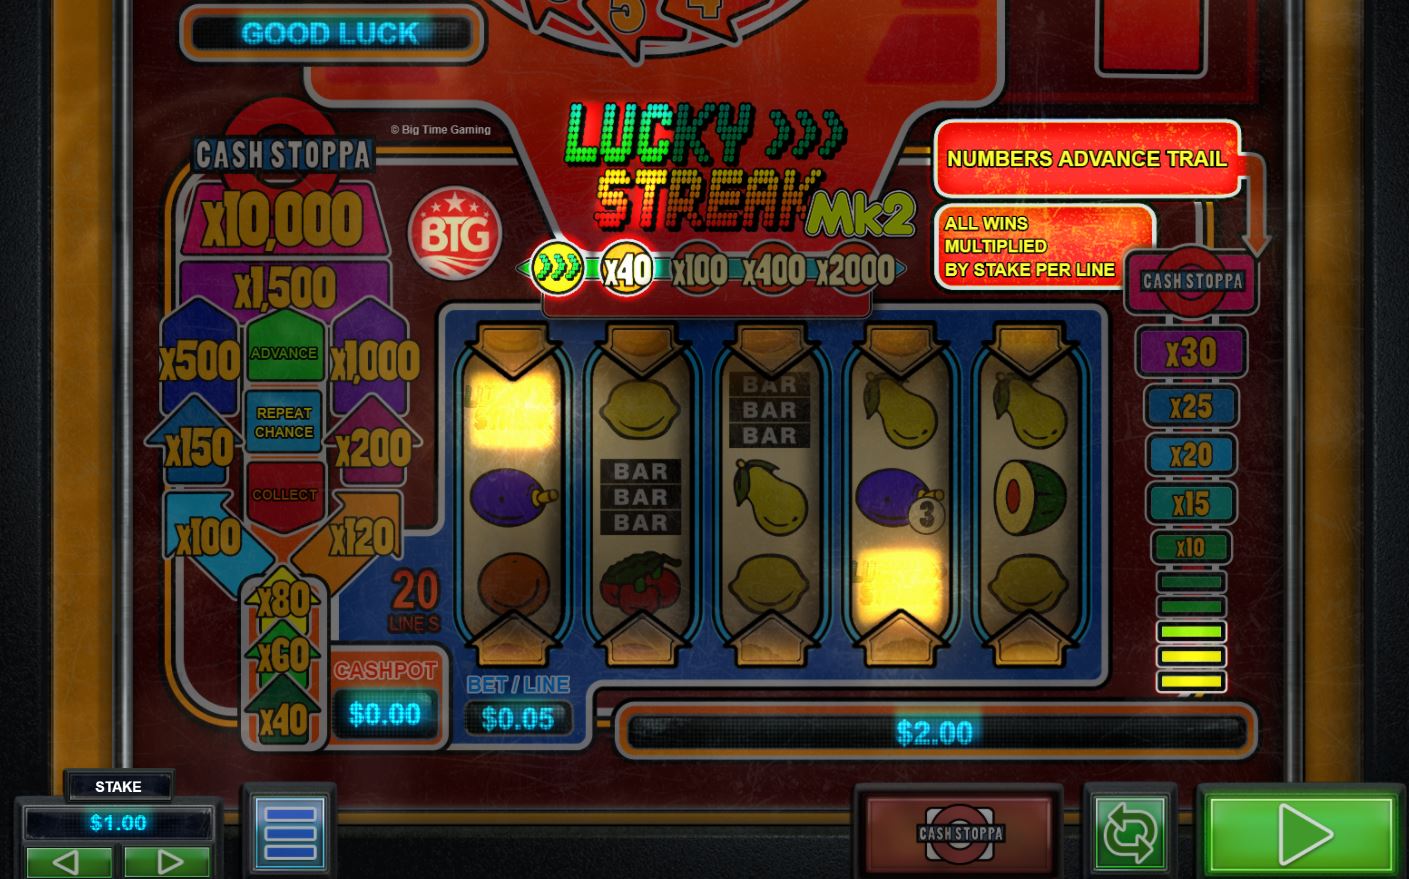 Roblox buffalo go for the progressive jackpot playing streak of luck slots cheats gambling